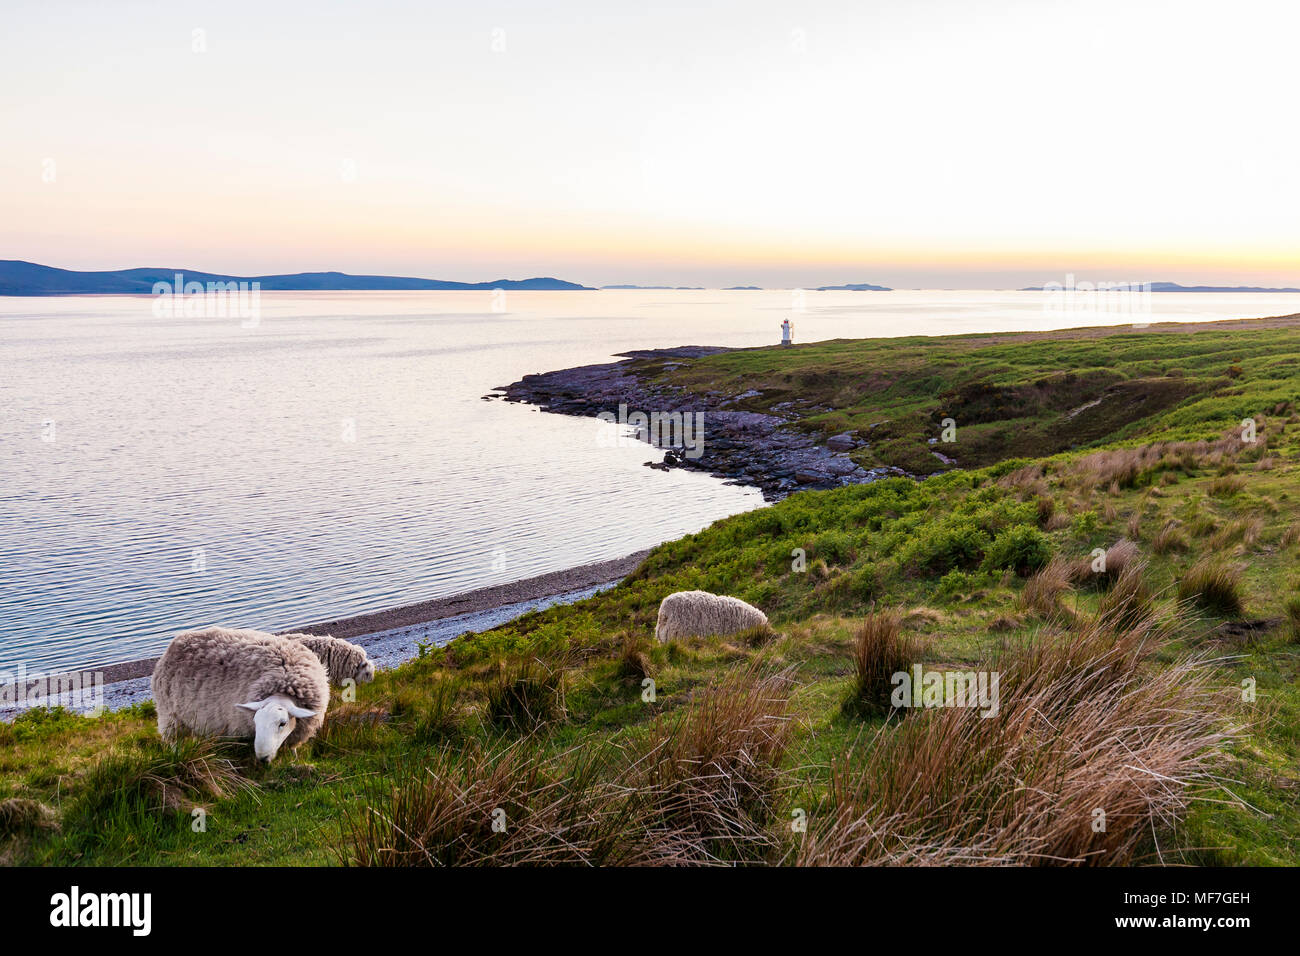 United Kingdom, Scotland, Highland, Loch Broom, near Ullapool, Rhue Lighthouse, sheep on meadow in the evening light Stock Photo